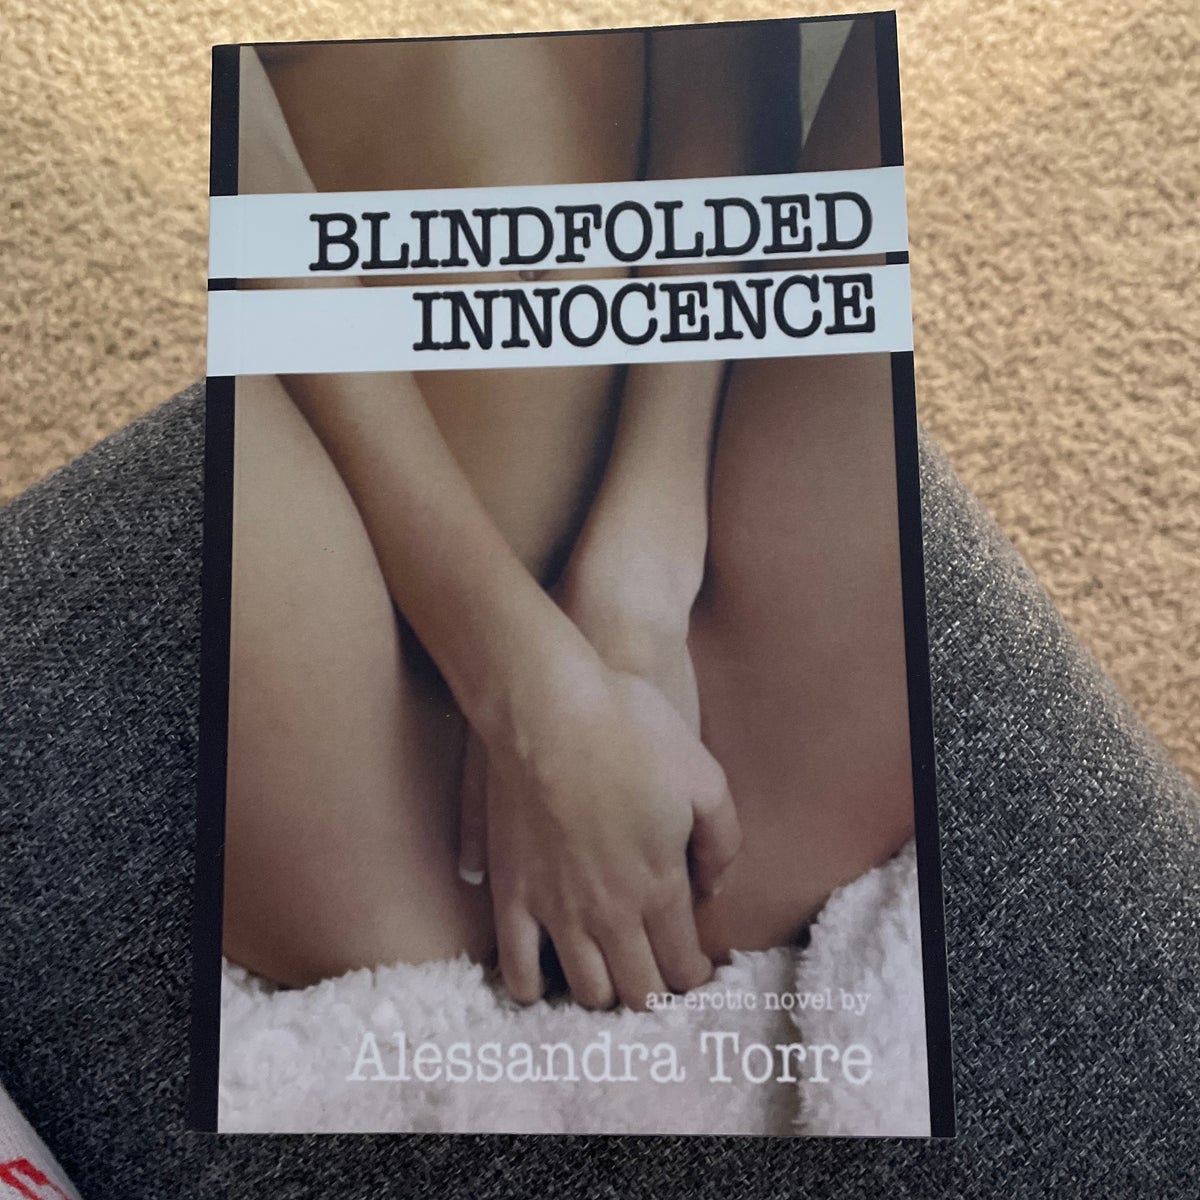 Alessandra Torre - Author of Blindfolded Innocence